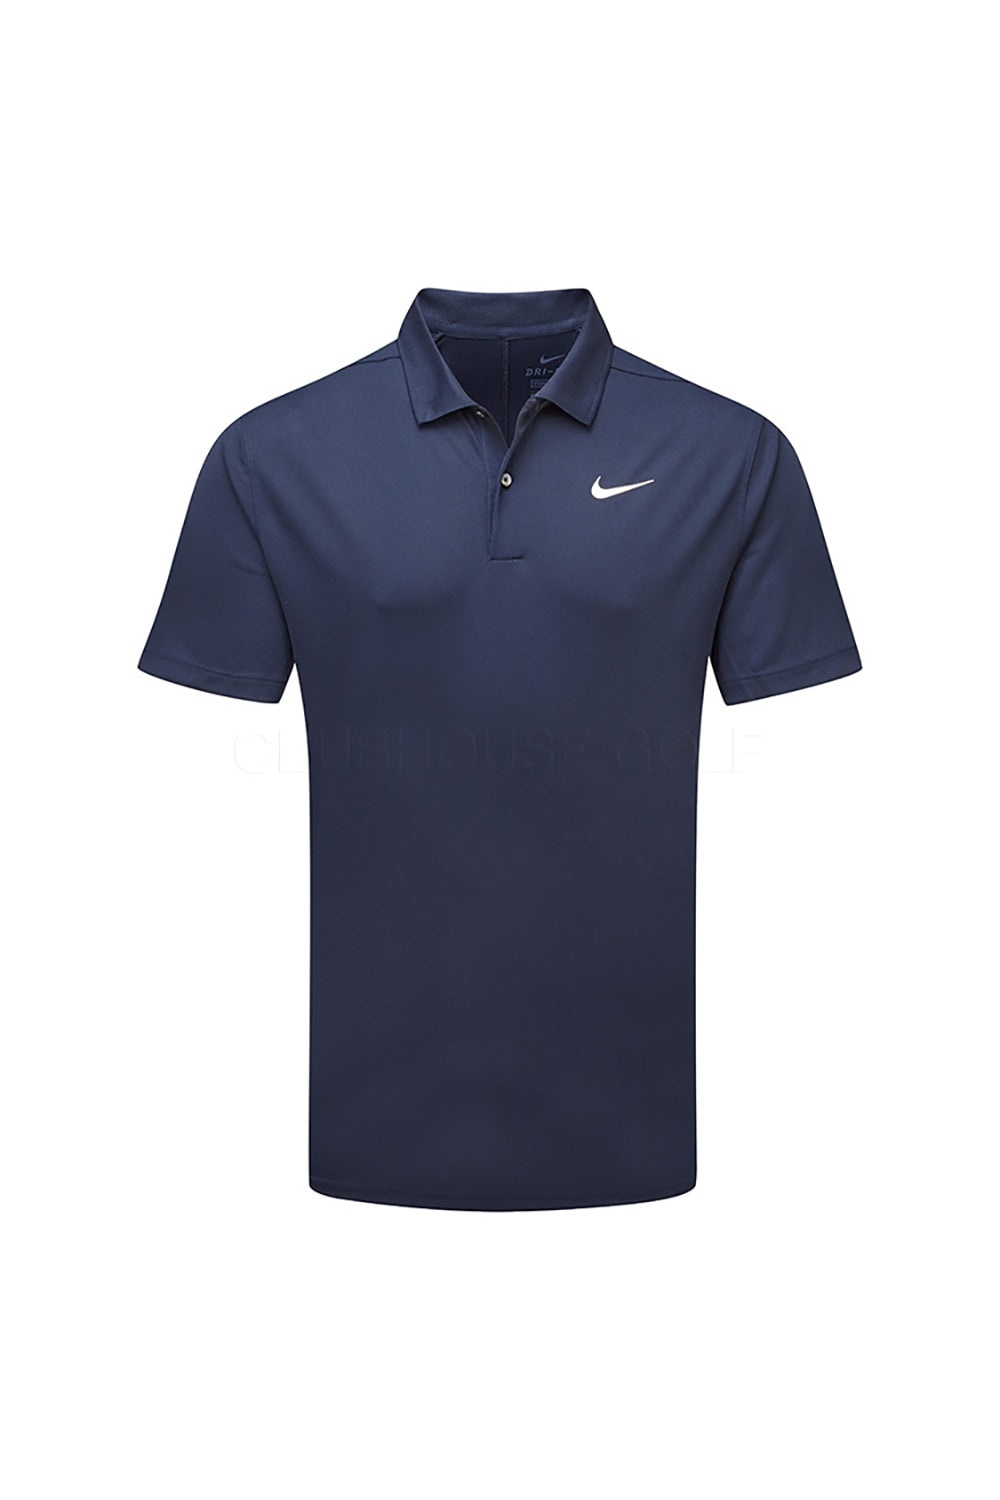 Nike Mens Solid Victory Polo Shirt (Navy)